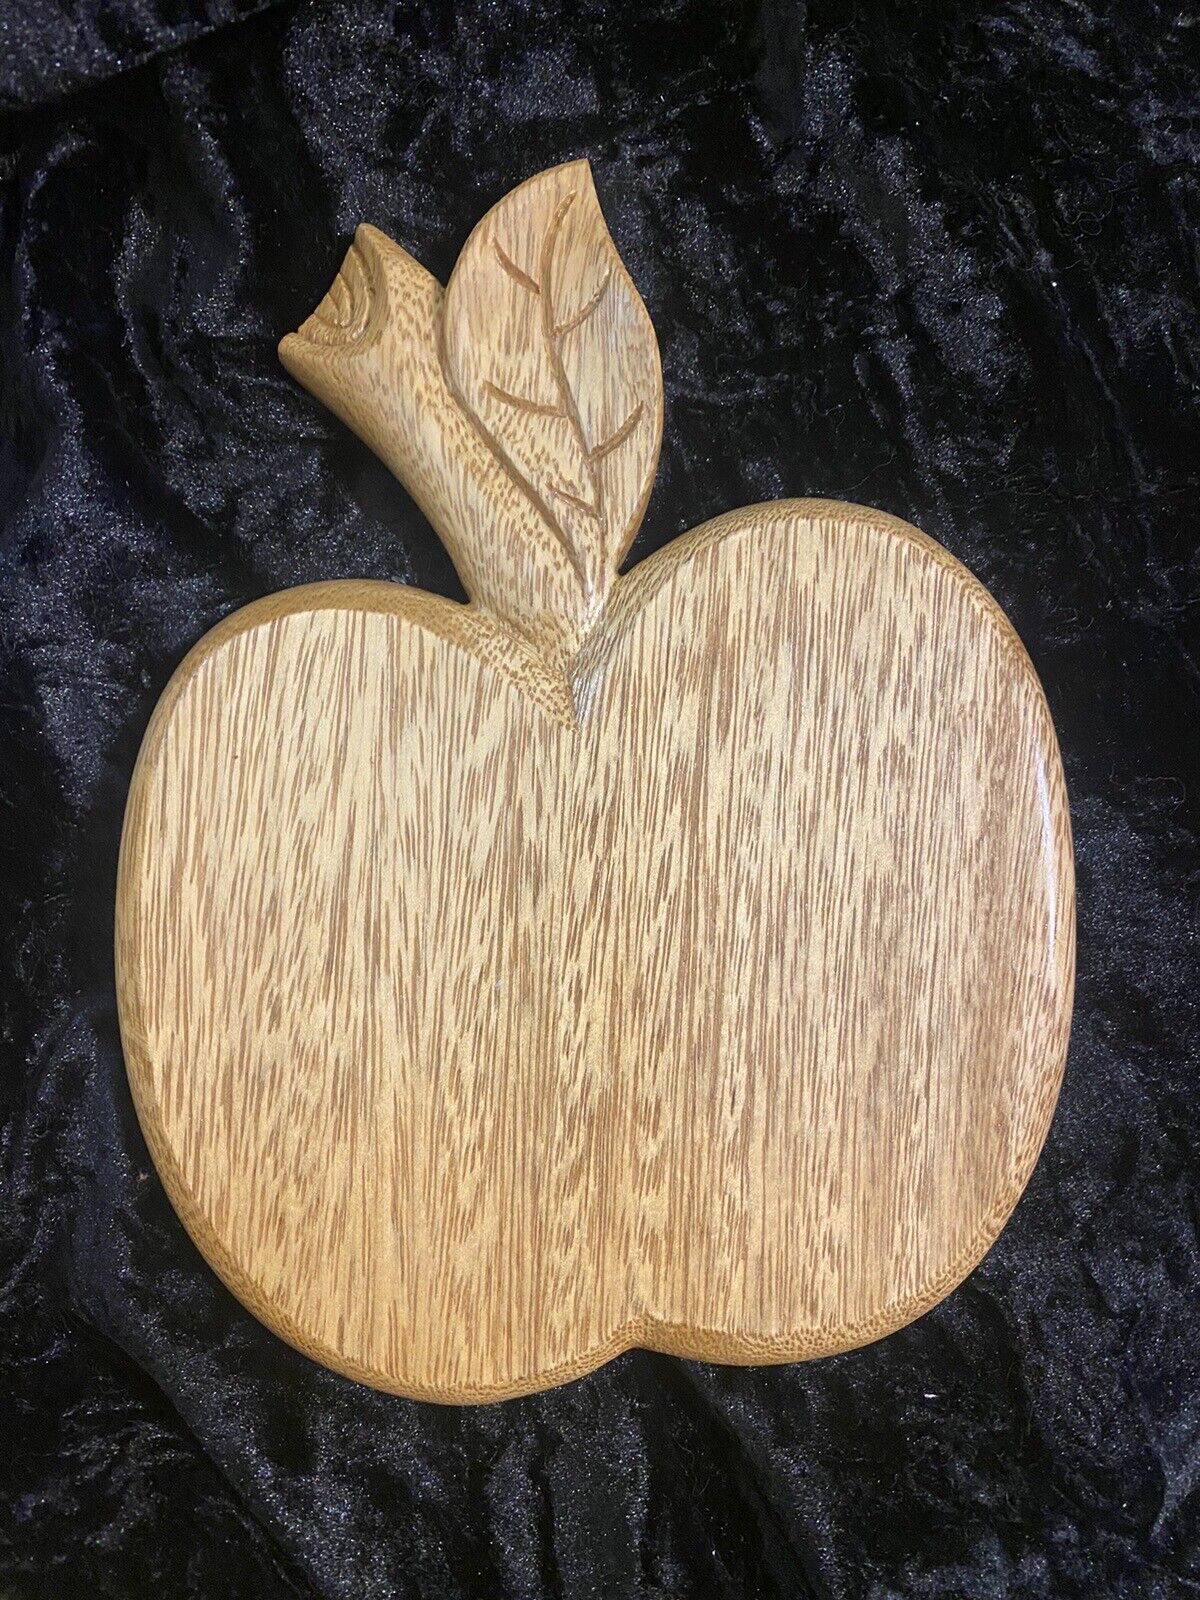 Vintage Wooden Apple Shaped Hot Dish Holder Approximately 7” X 9”